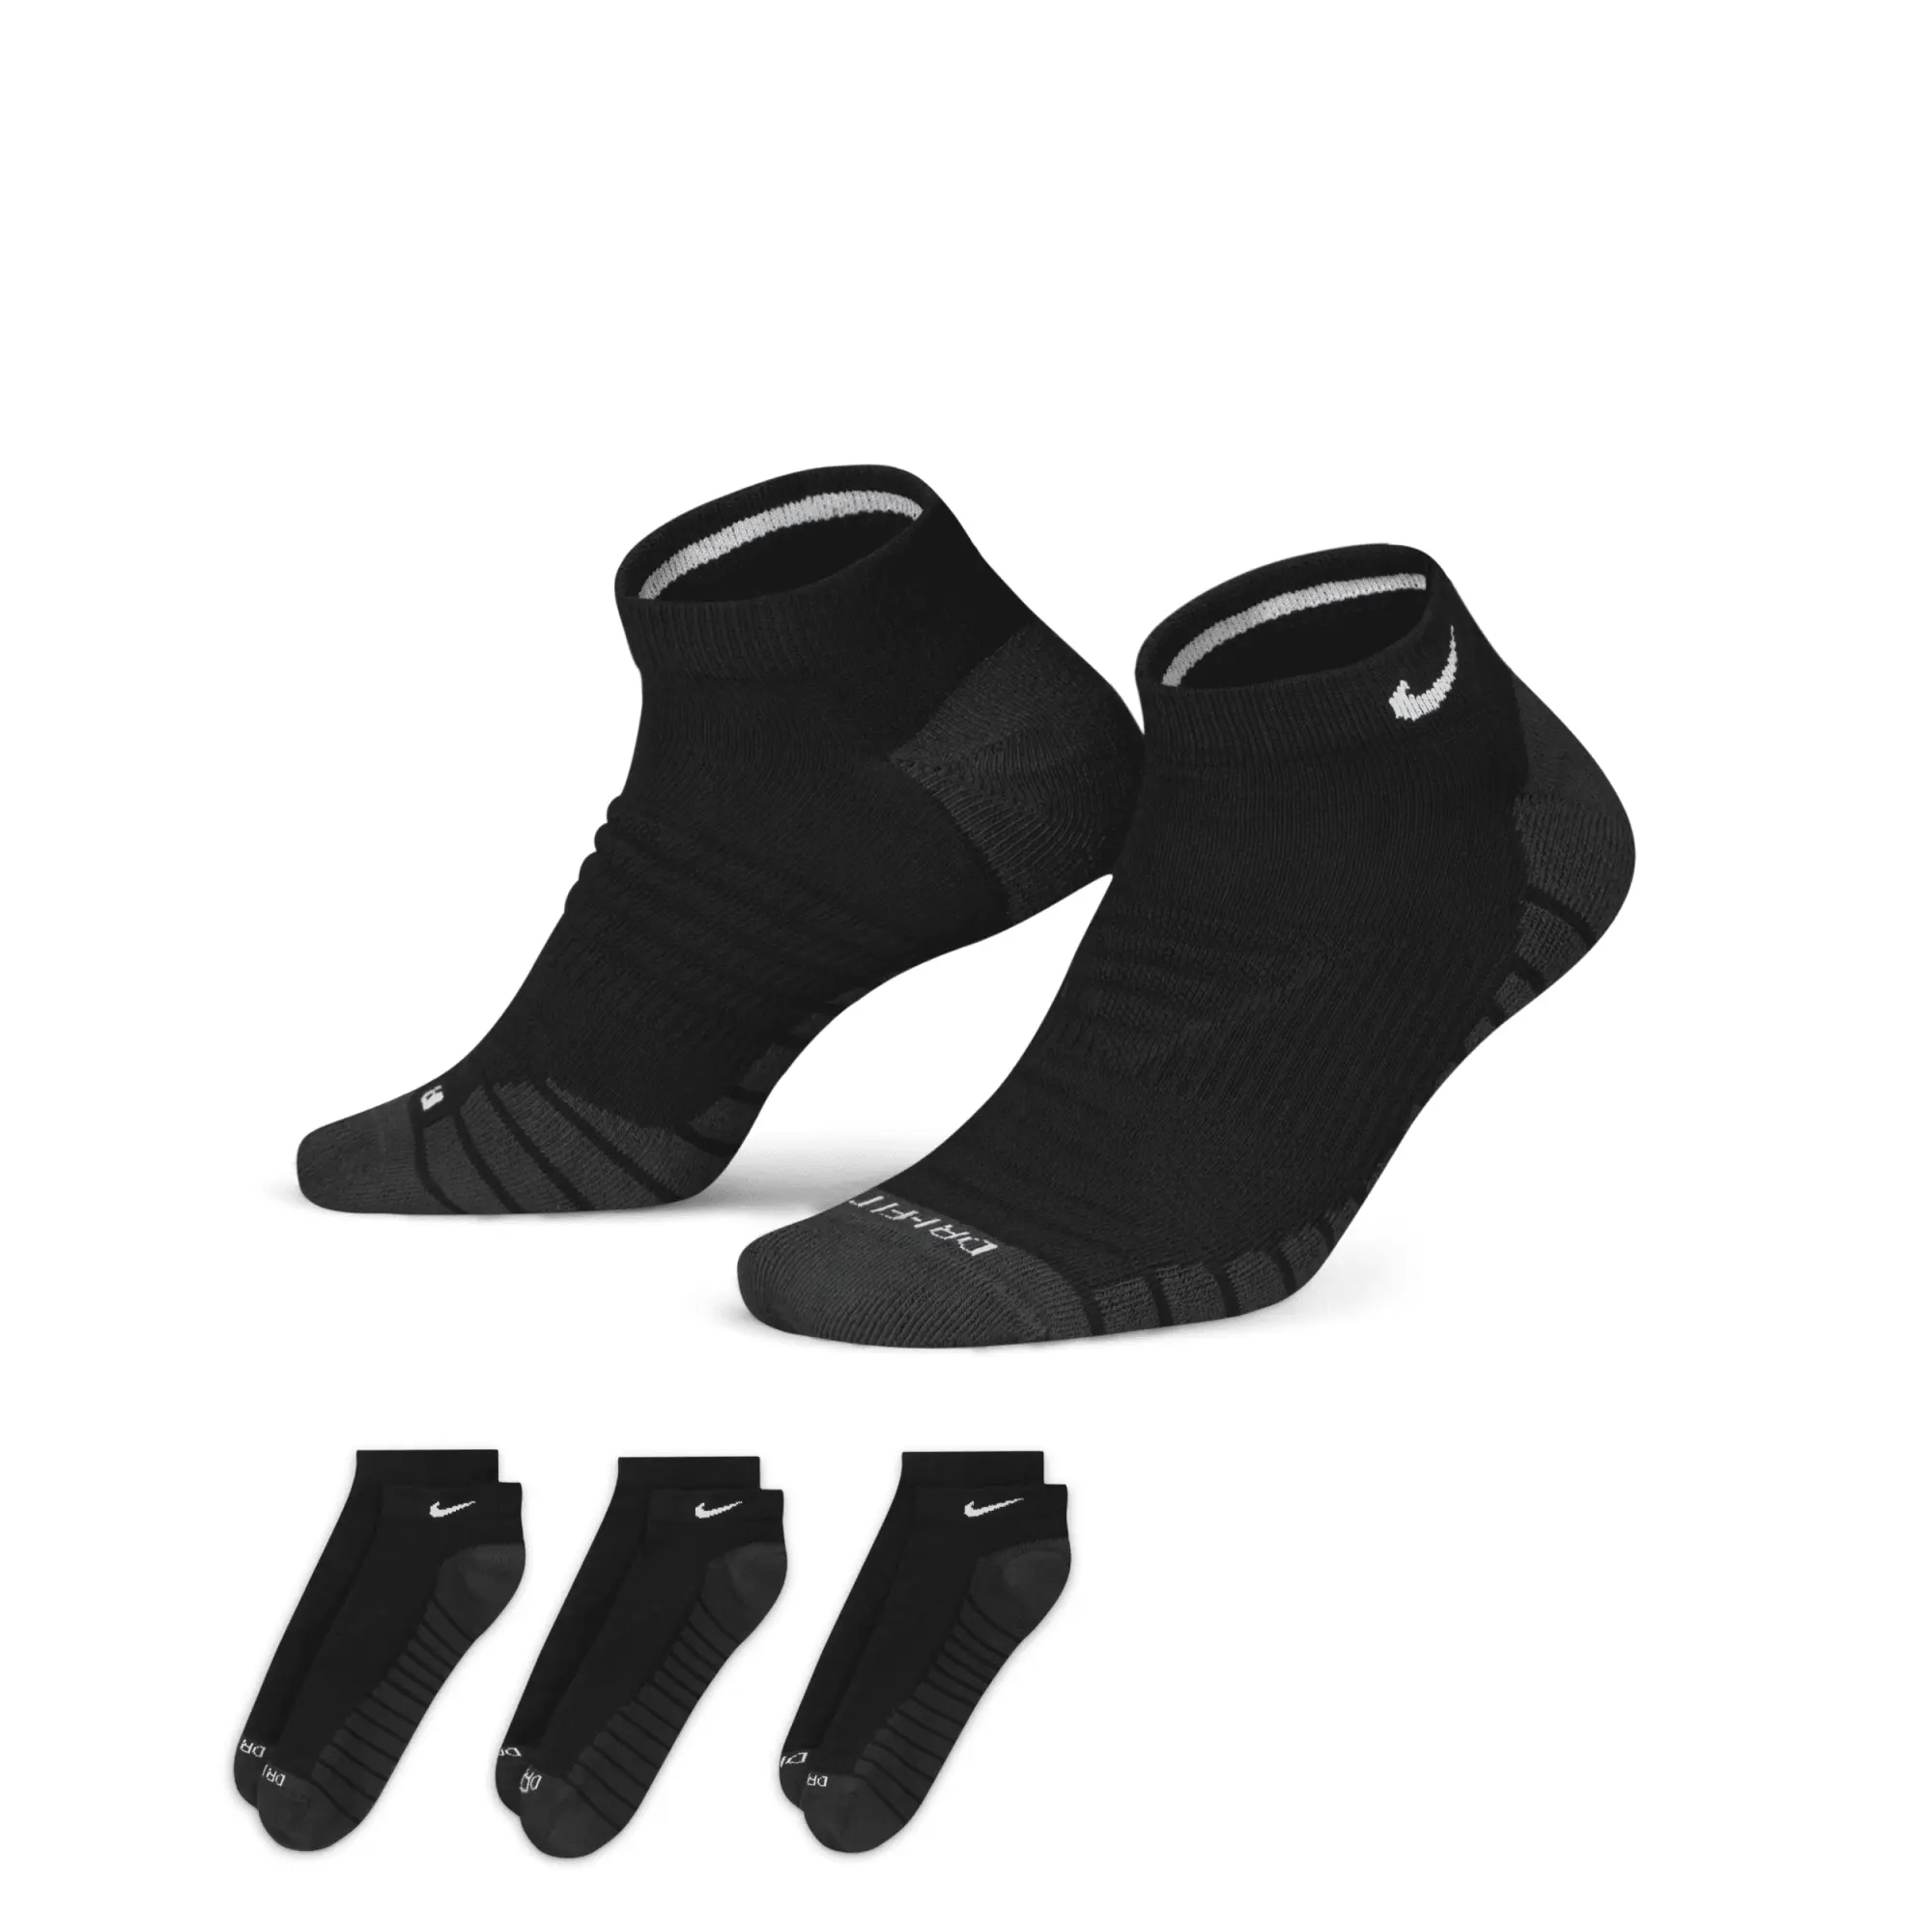 Nike Everyday Max Cushion No-Show Sports Socks 3 Pack - Black, Grey